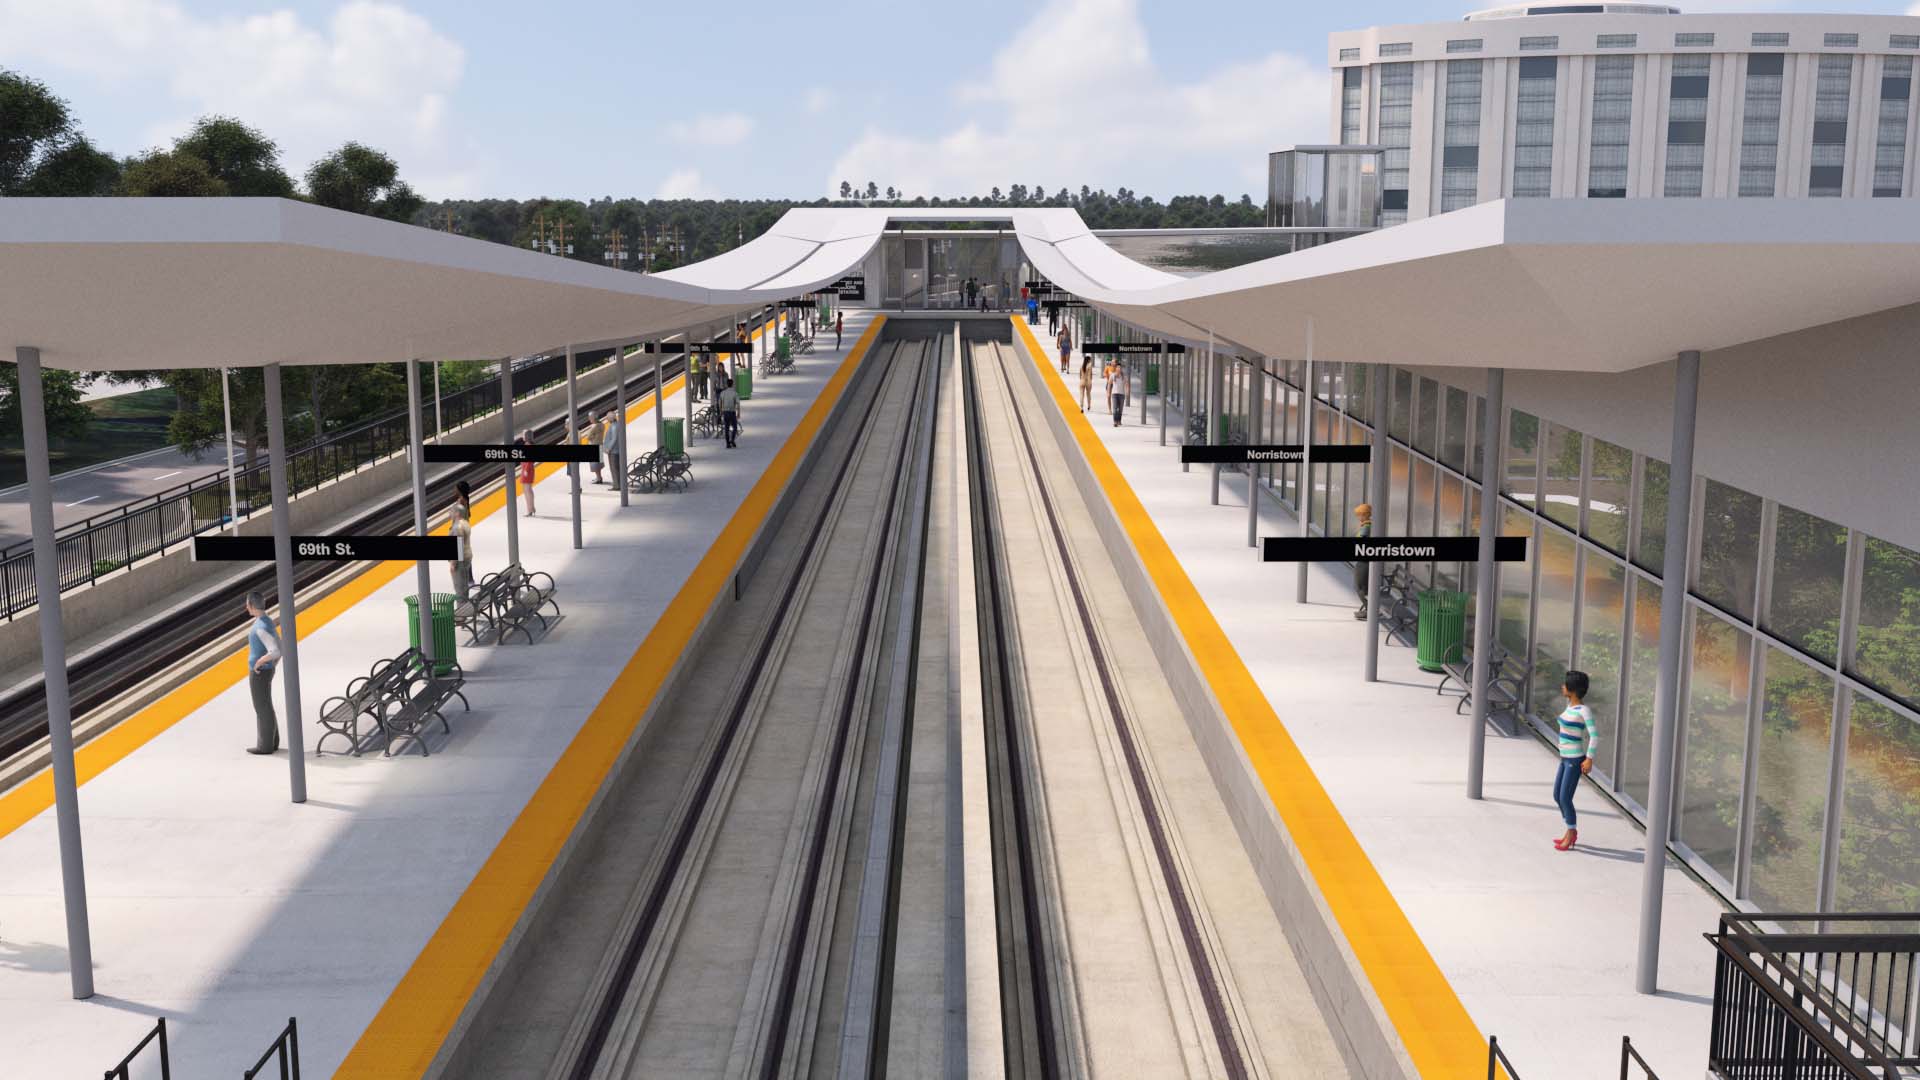 rendering of train platform